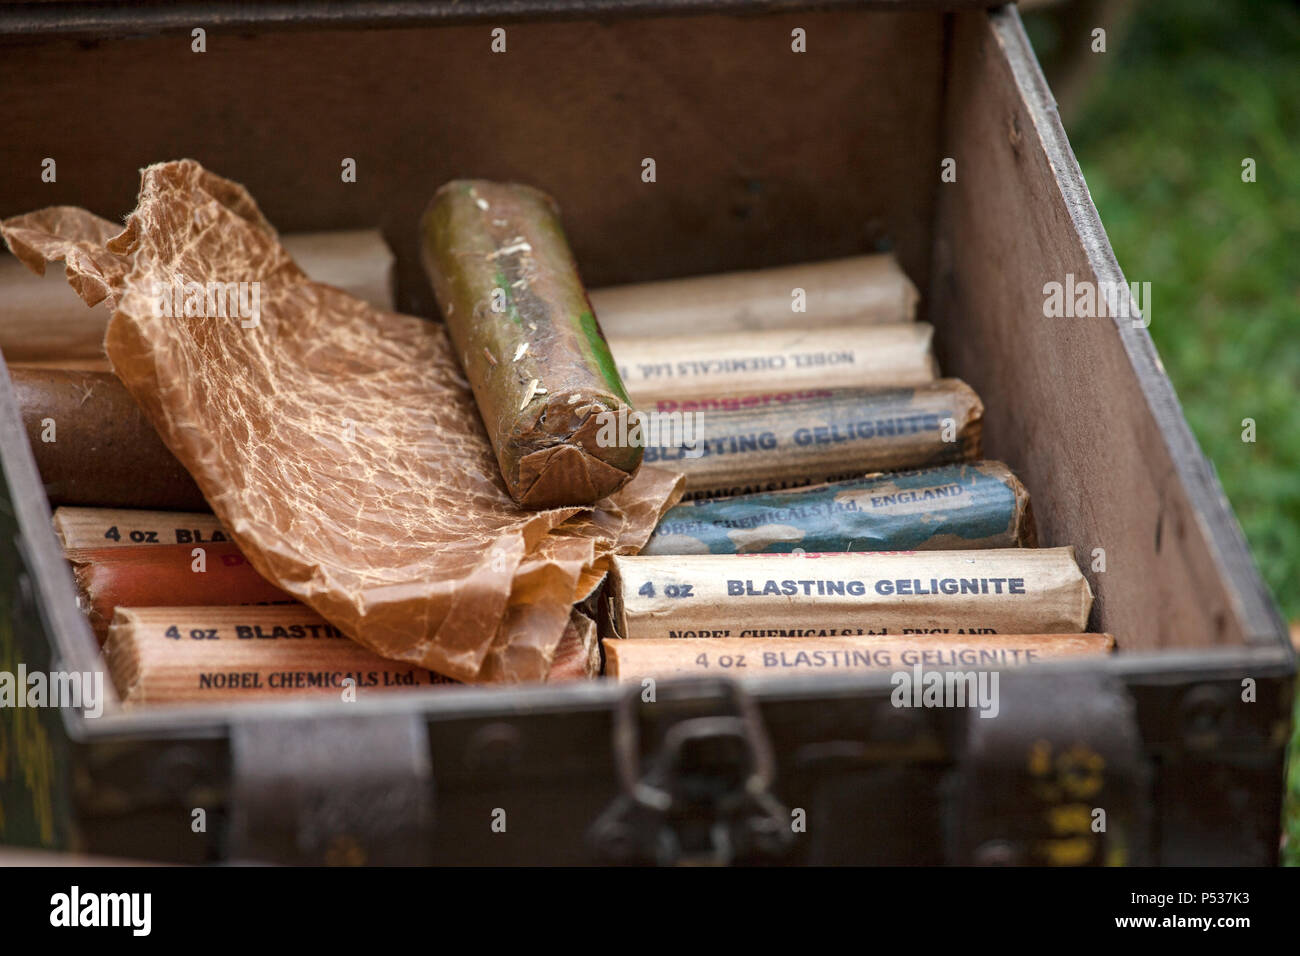 A Box of Blasting Gelignite. Stock Photo